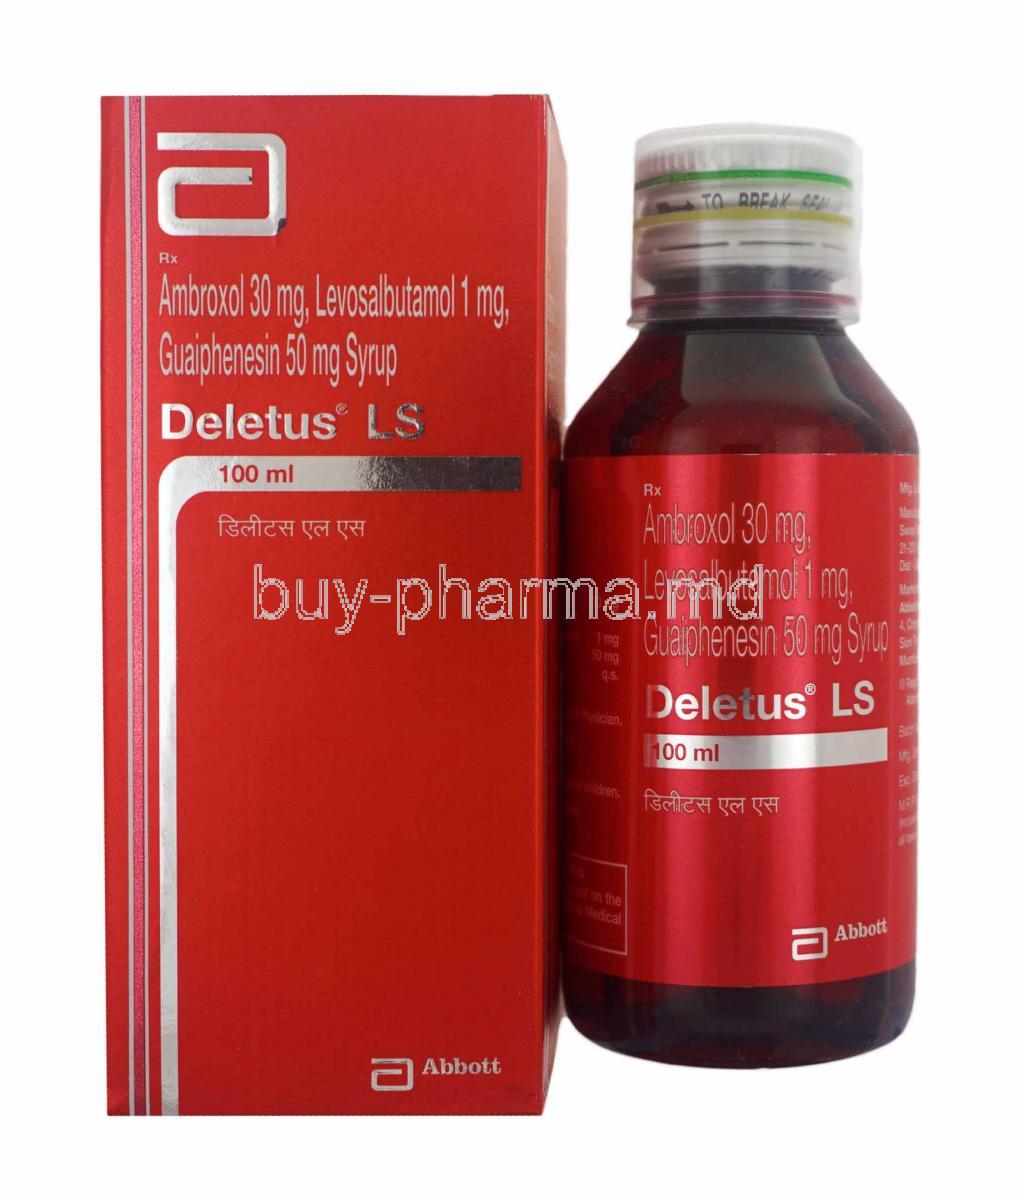 Deletus LS Syrup, Ambroxol, Levosalbutamol and Guaifenesin, box and bottle